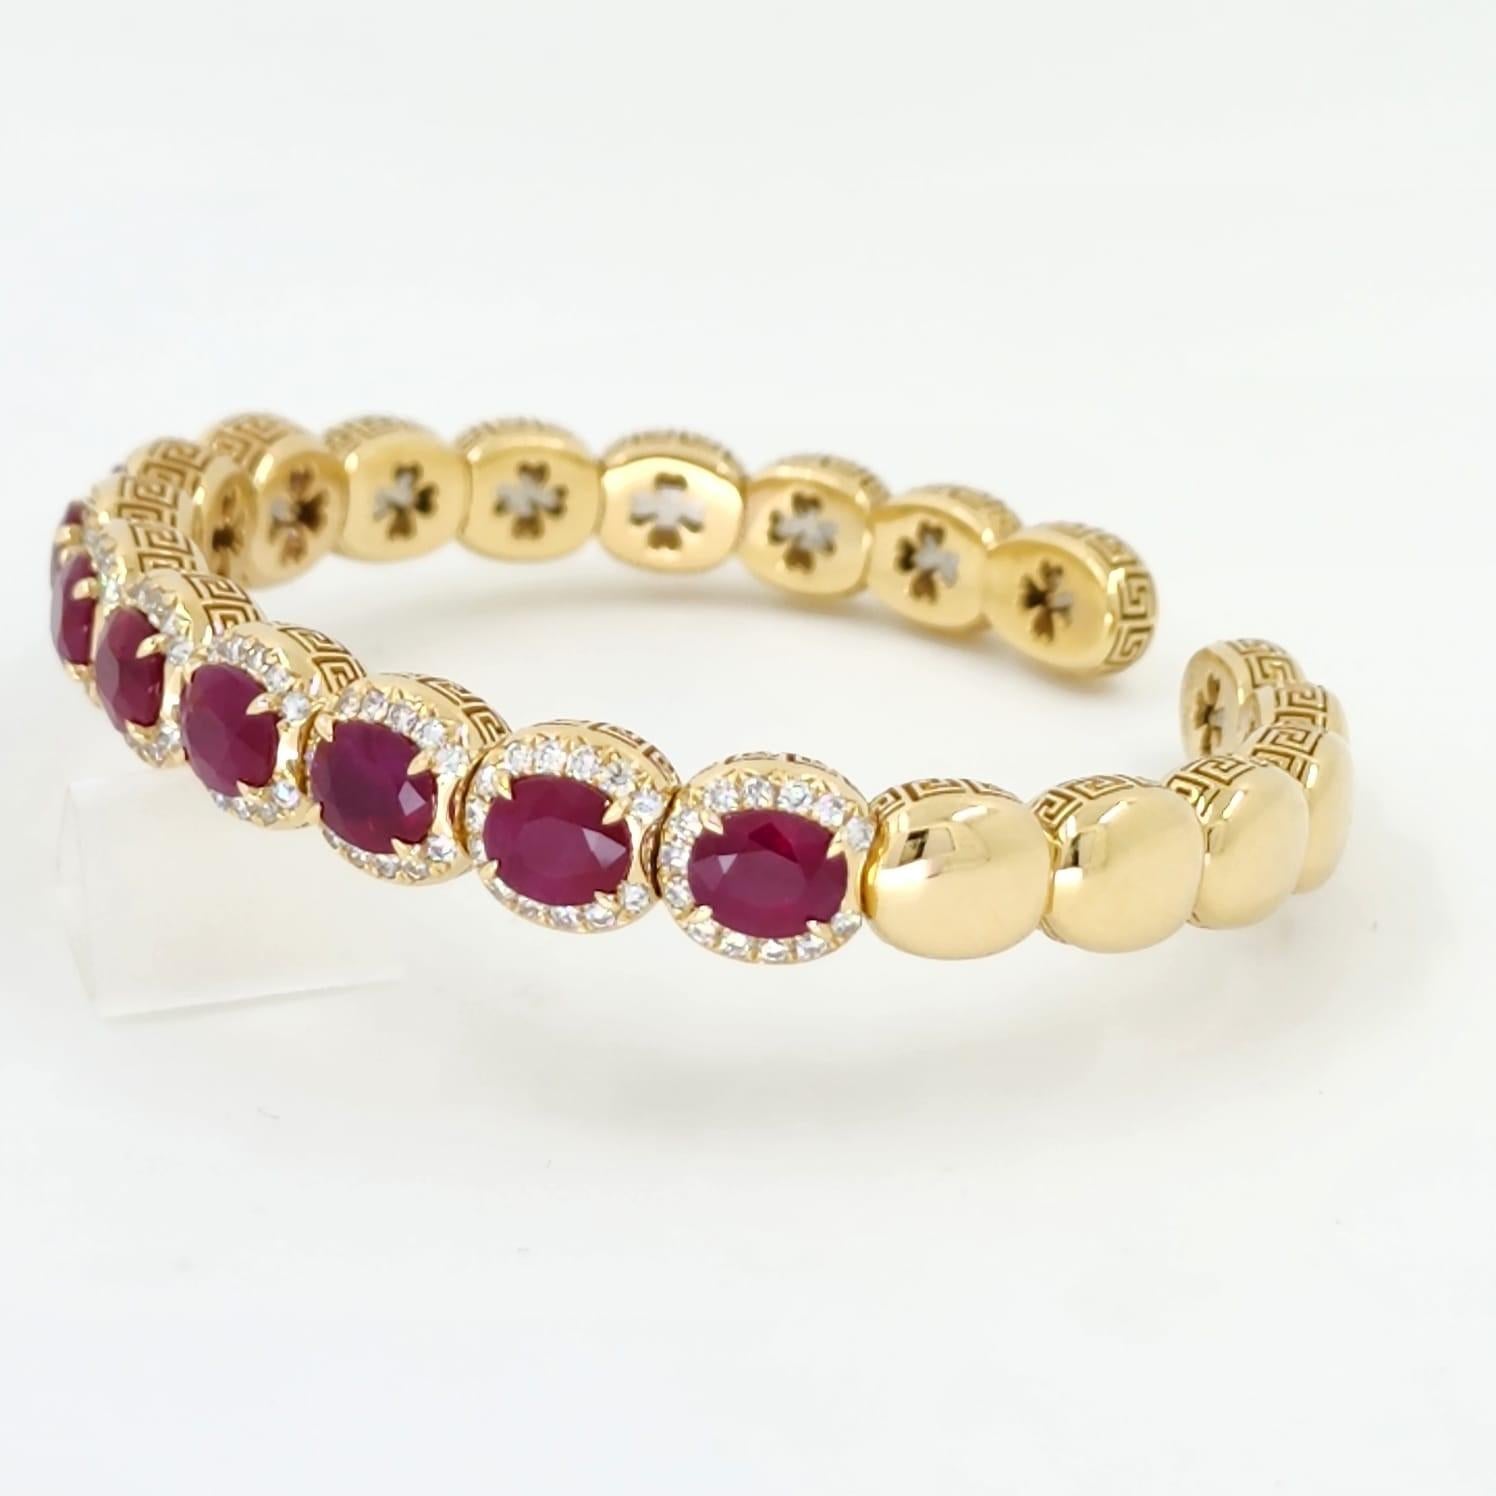 Oval Cut Vintage 7.55 Carat Ruby Diamond Open Cuff Bangle Bracelet in 18K Yellow Gold For Sale